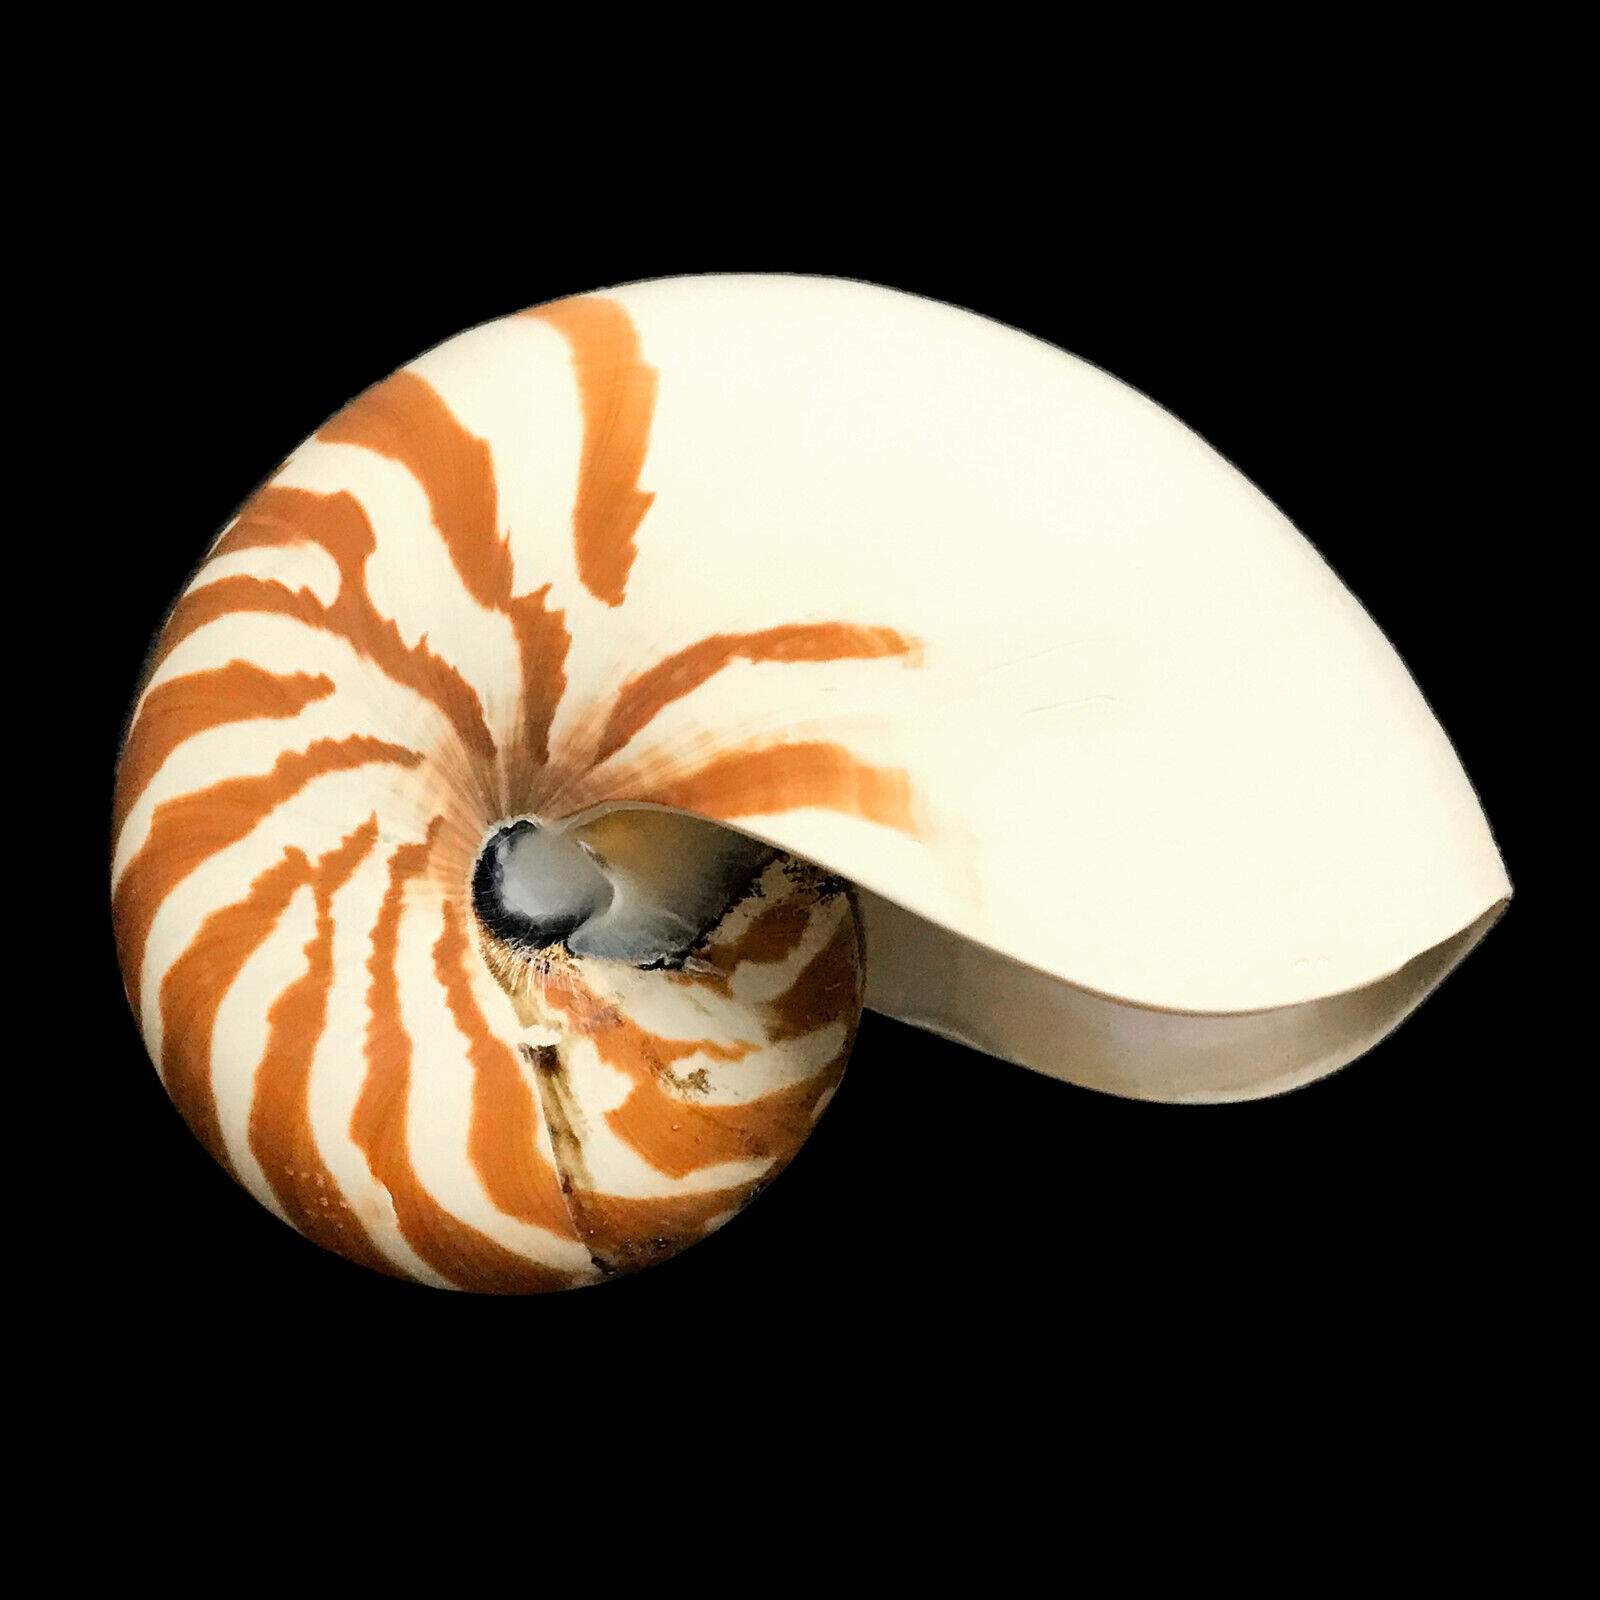 Chambered Nautilus Sea Shell Rare Natural Display Specimen